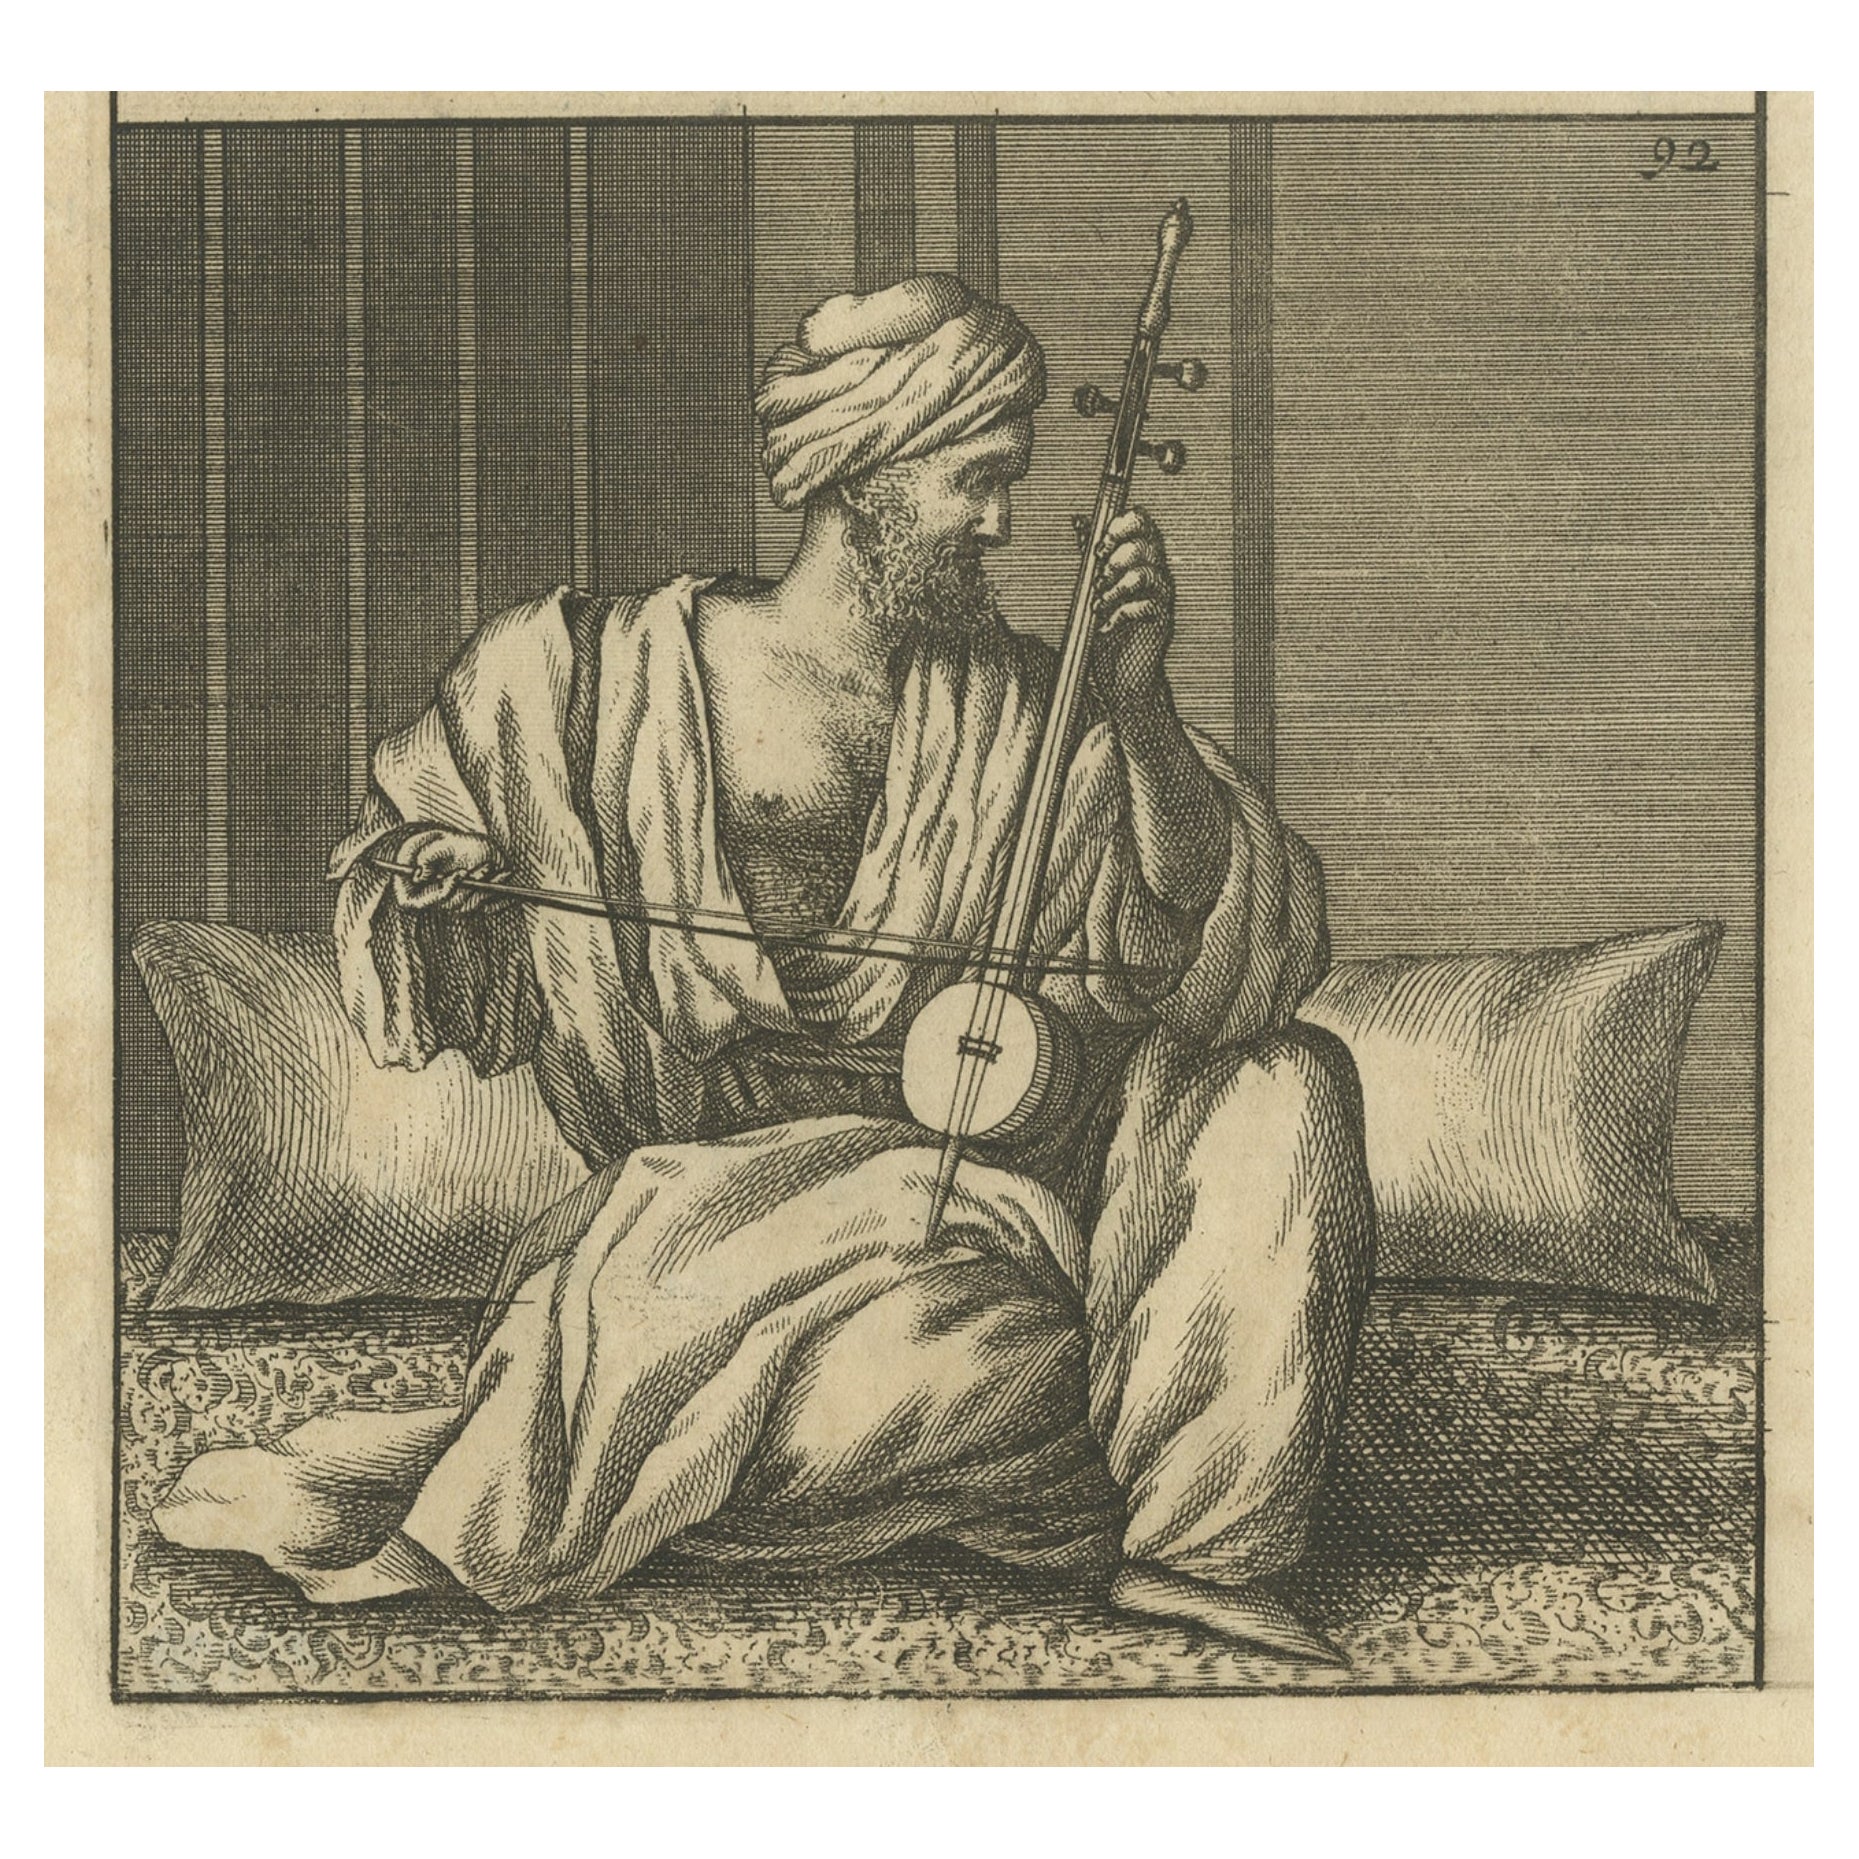 Rare Antique Print of an Arabian Man Playing a Violin or Kamanche in Cairo, 1698